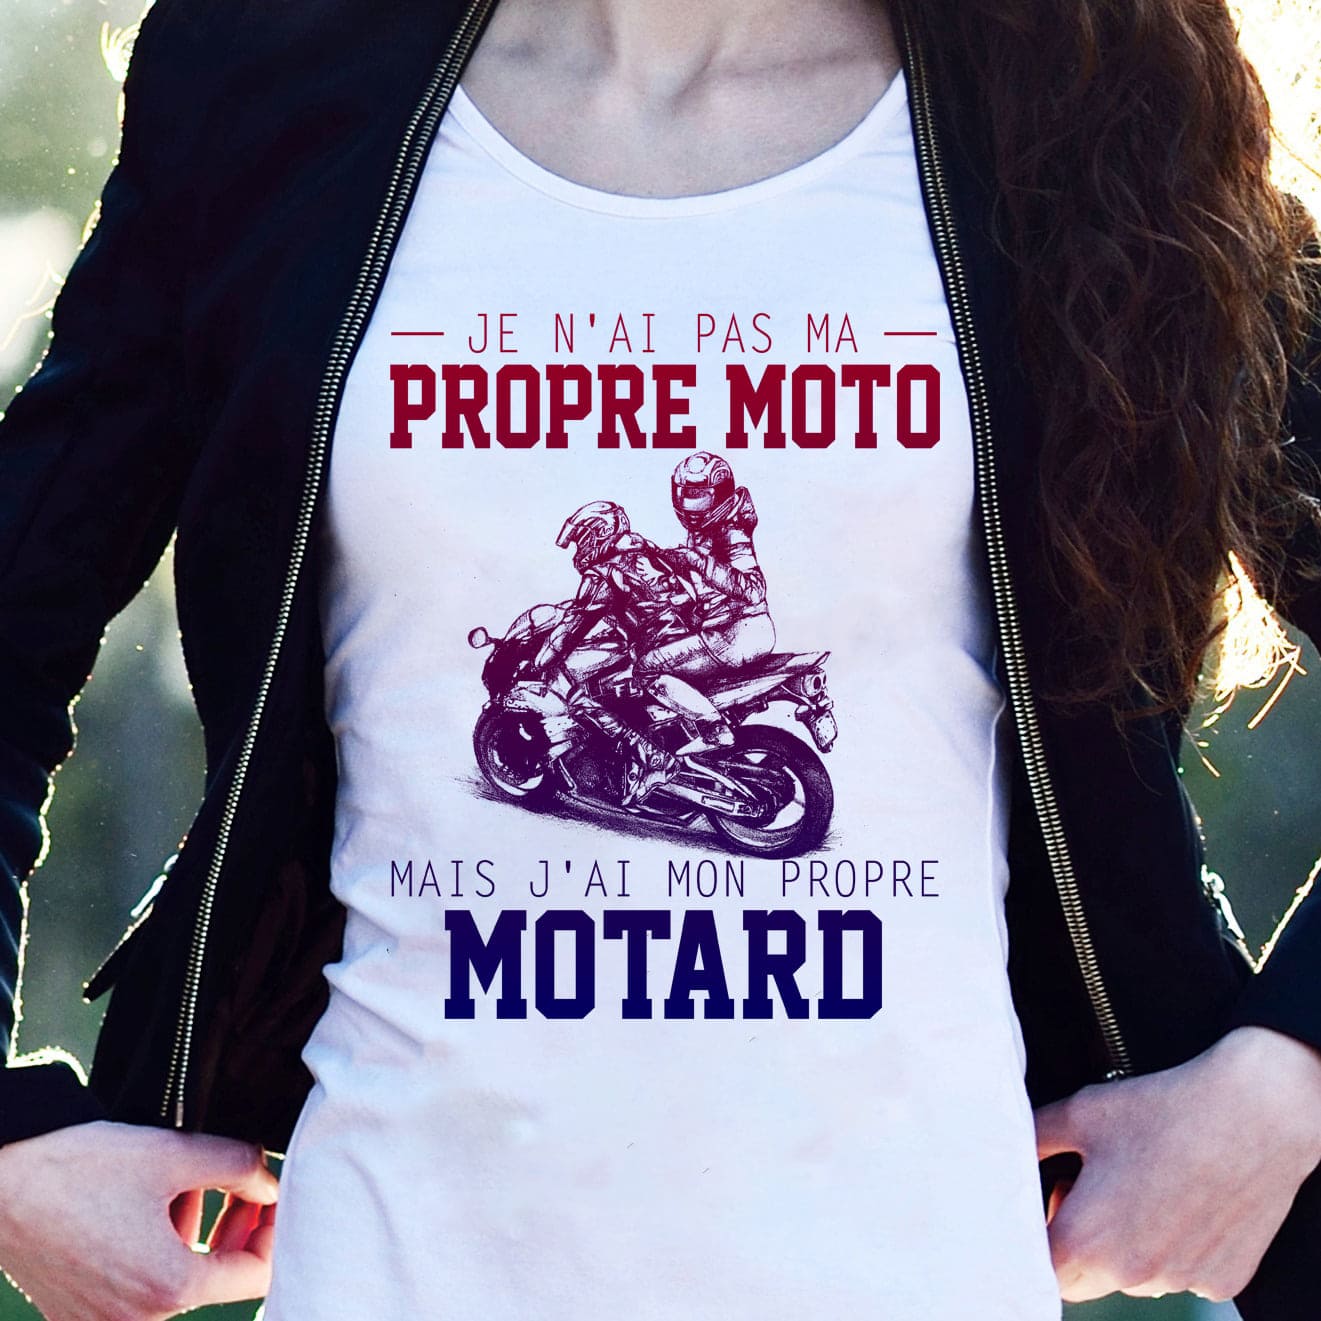 Je n'ai pas ma propre moto mais j'ai mon propre motard - Love riding motorcycle, motorcycle couple